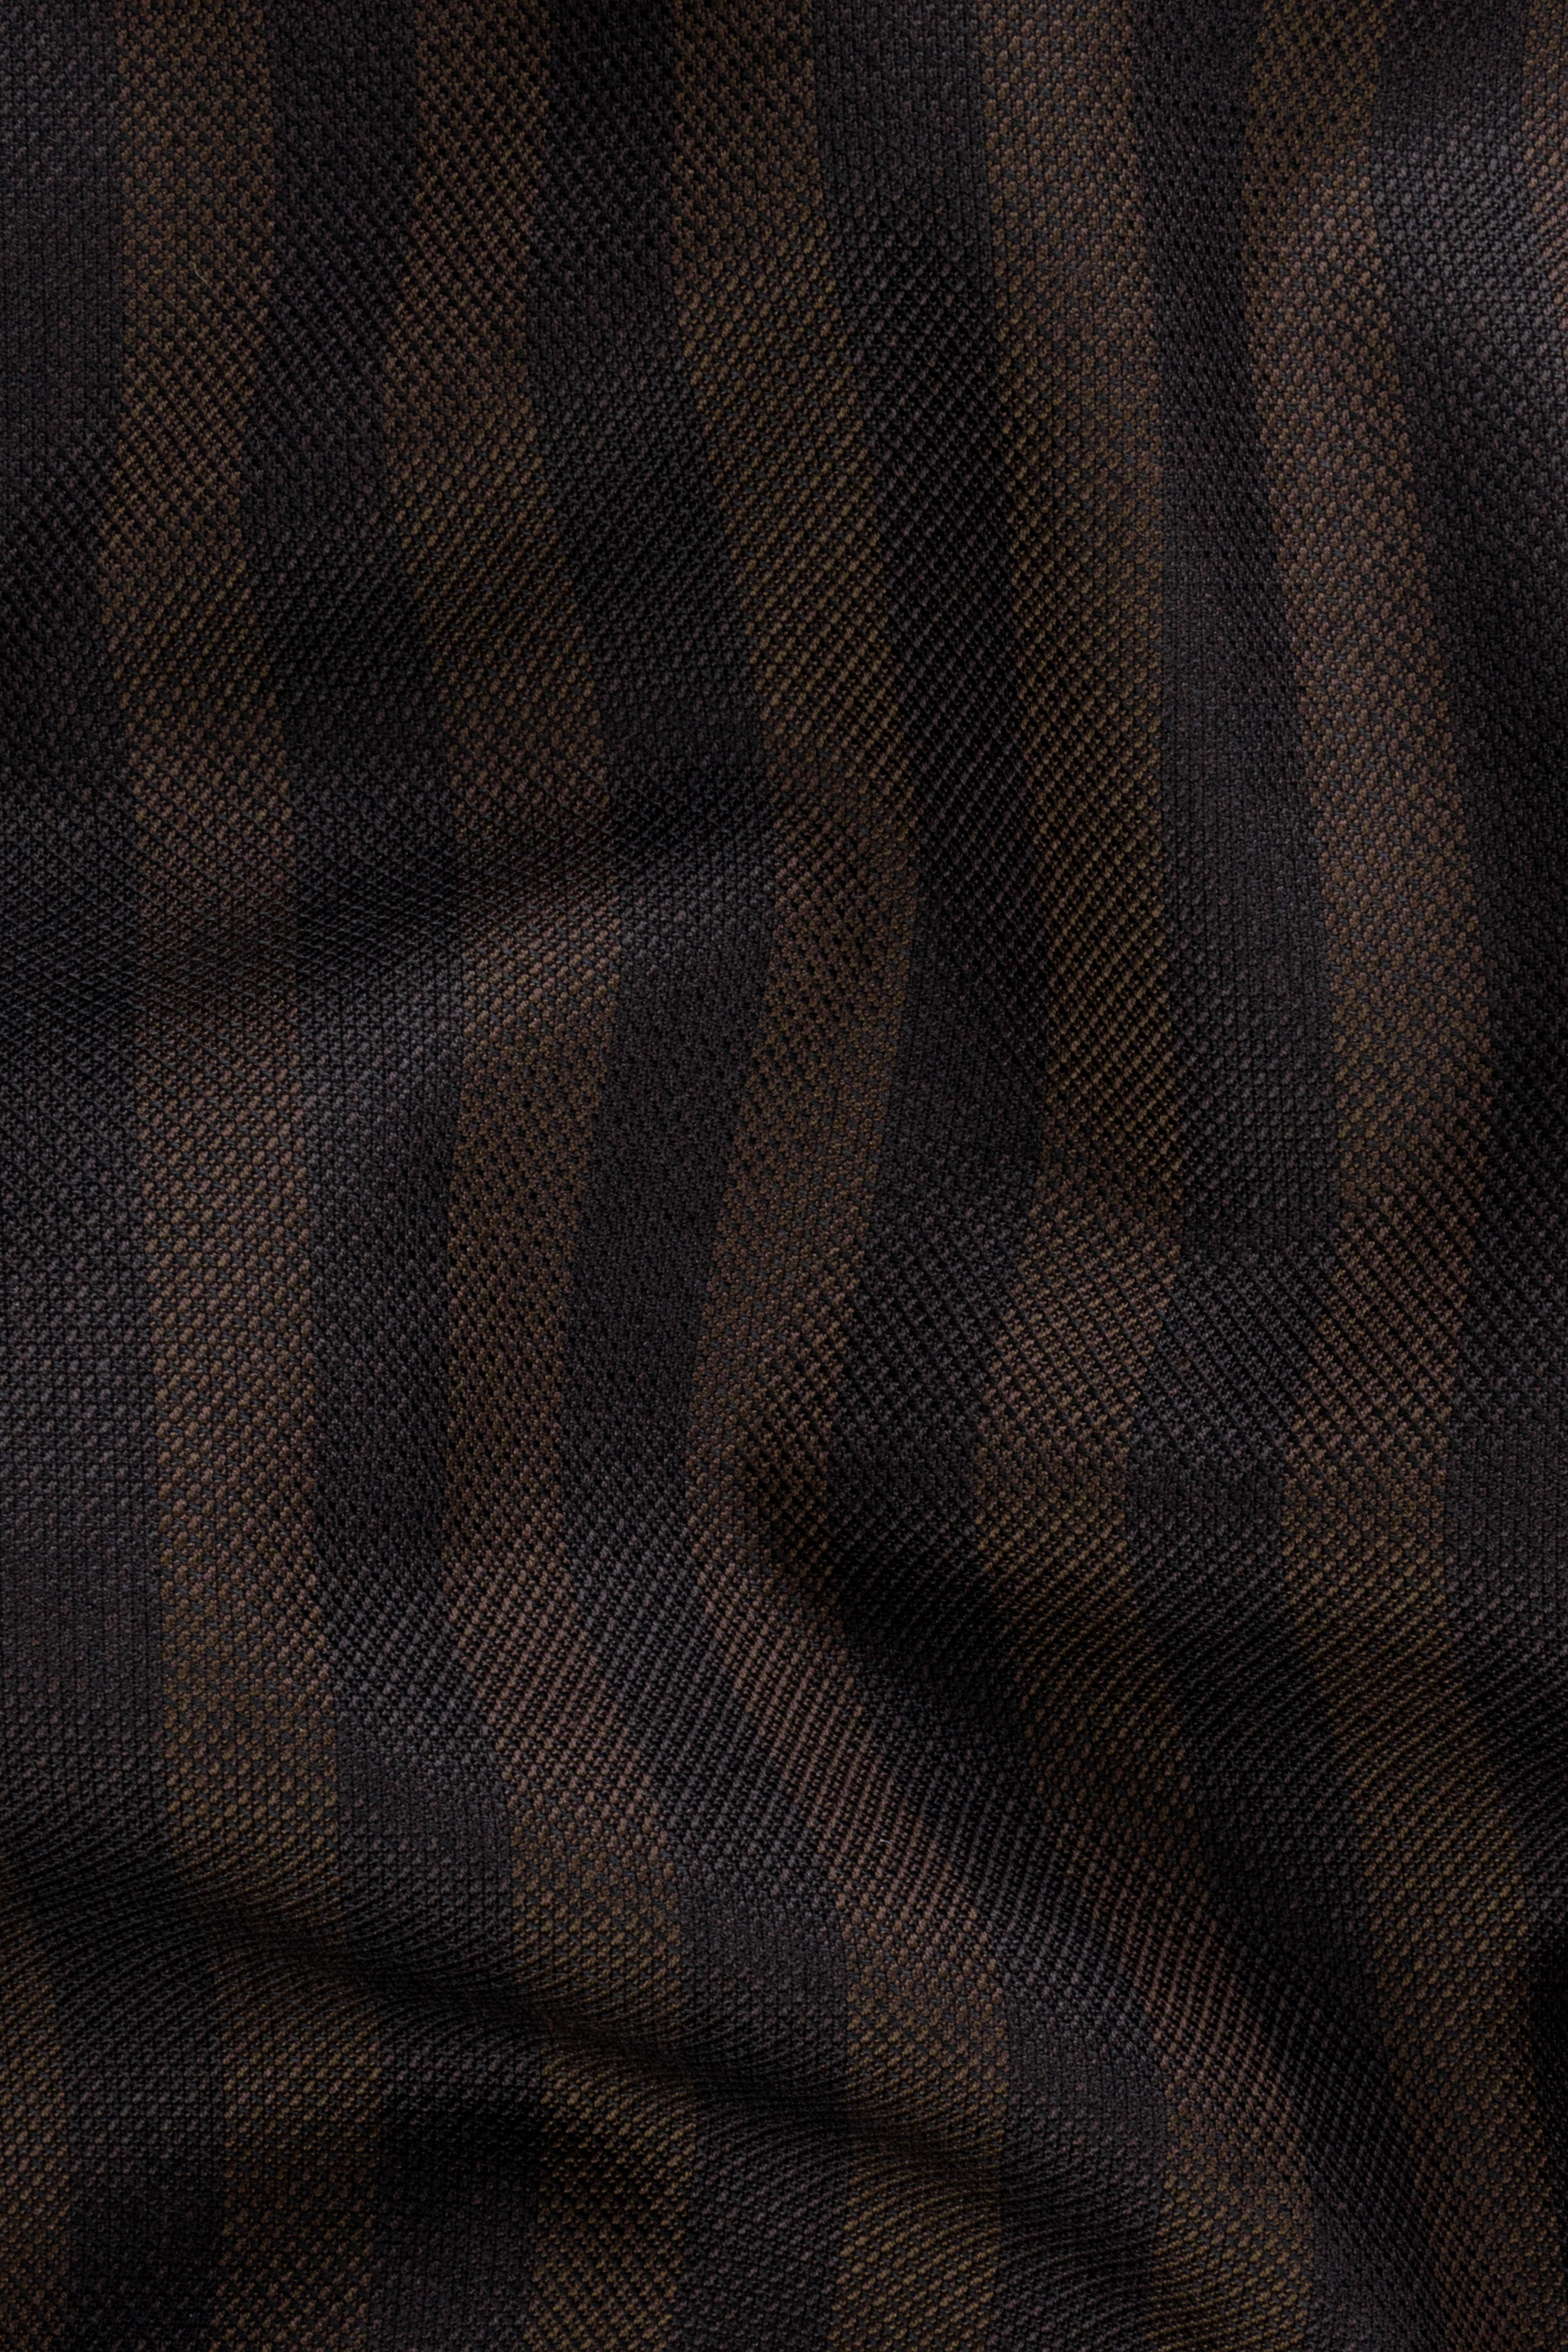 Eternity Brown With Vulcan Black Striped Wool Blend Waistcoat